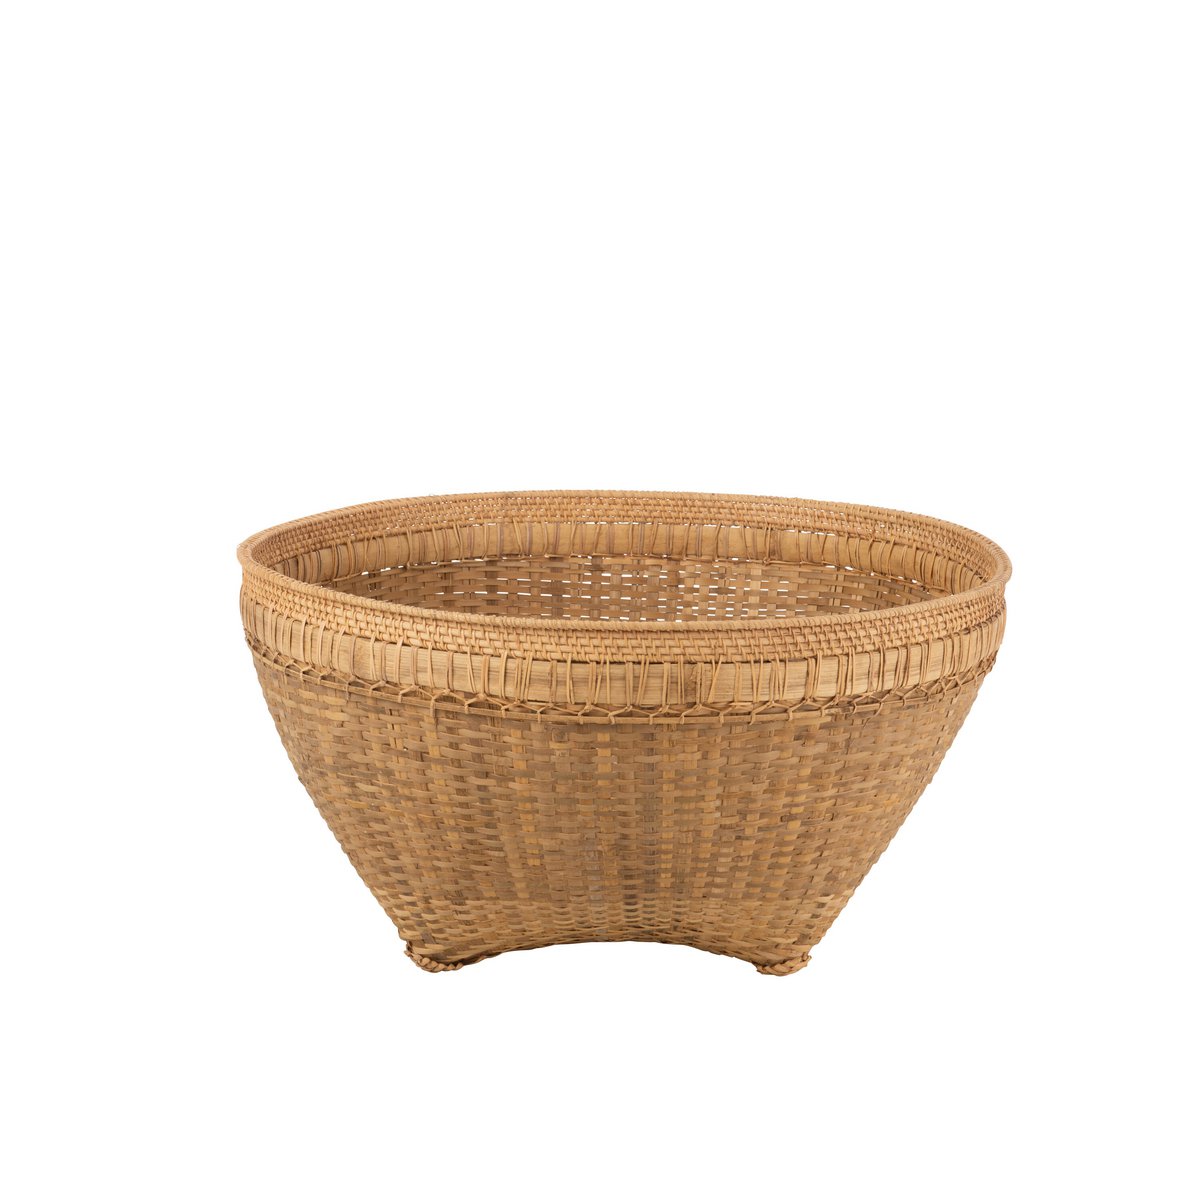 XL basket made of rattan, round - natural